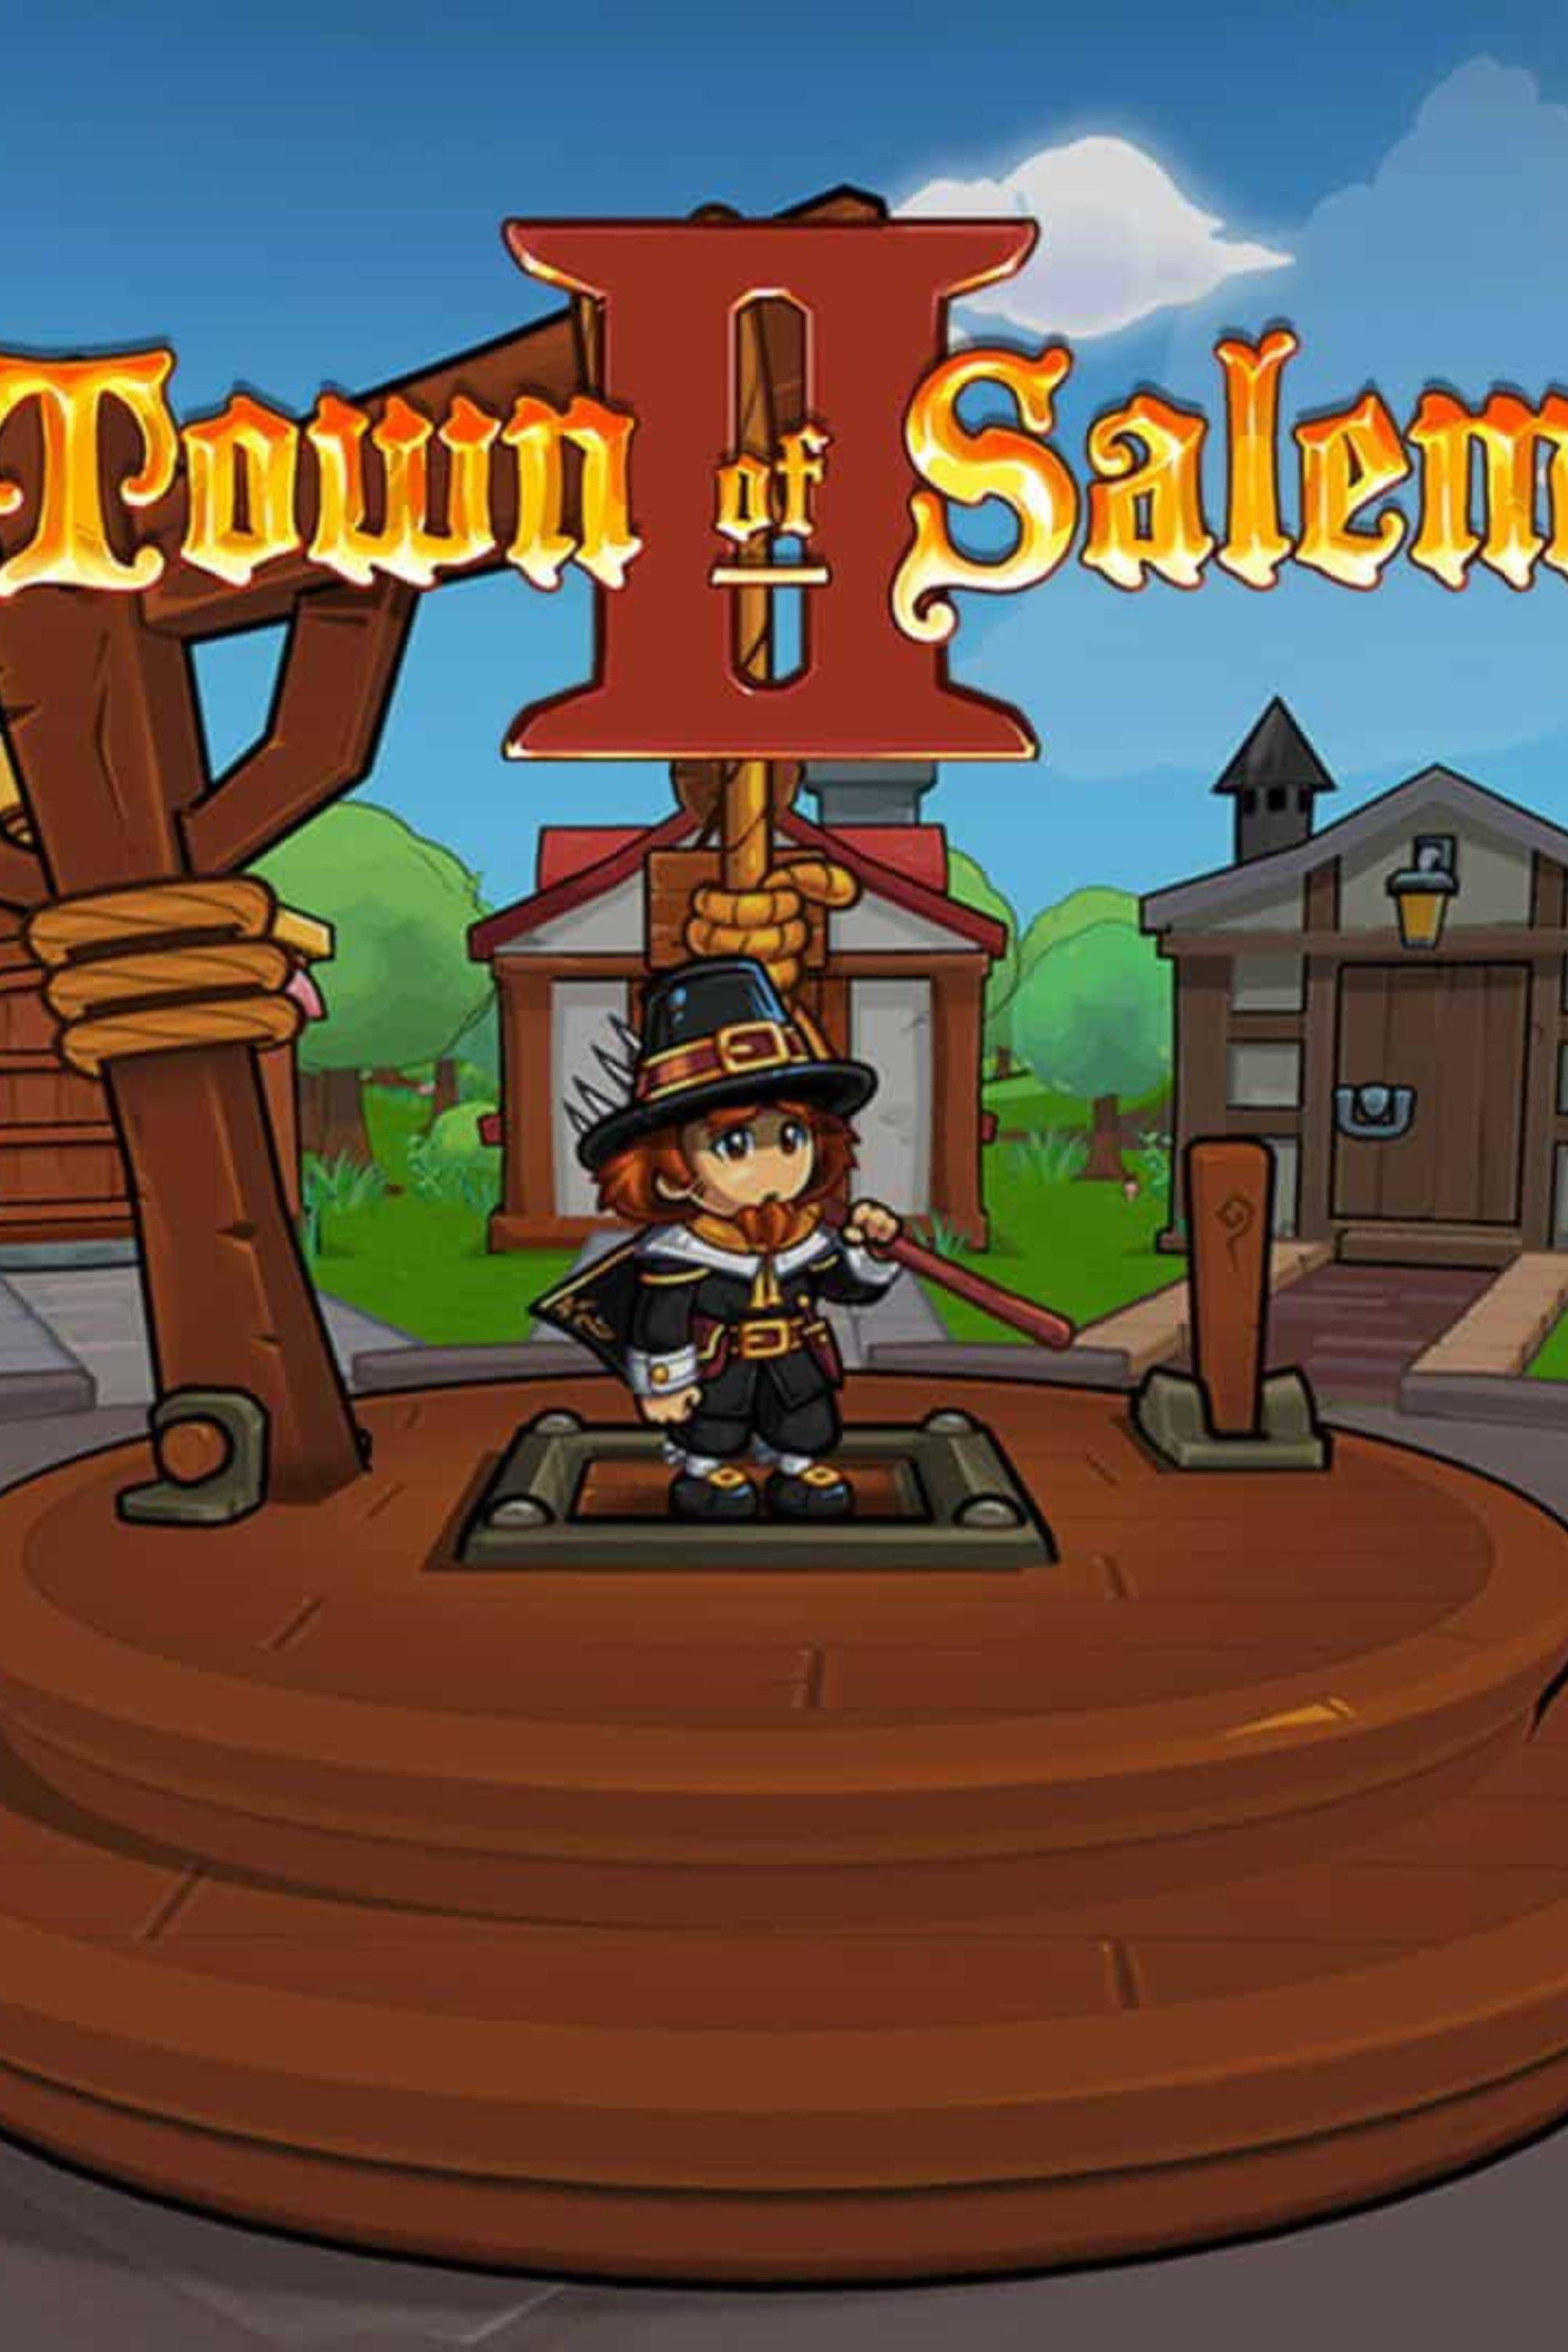 Town of Salem 2